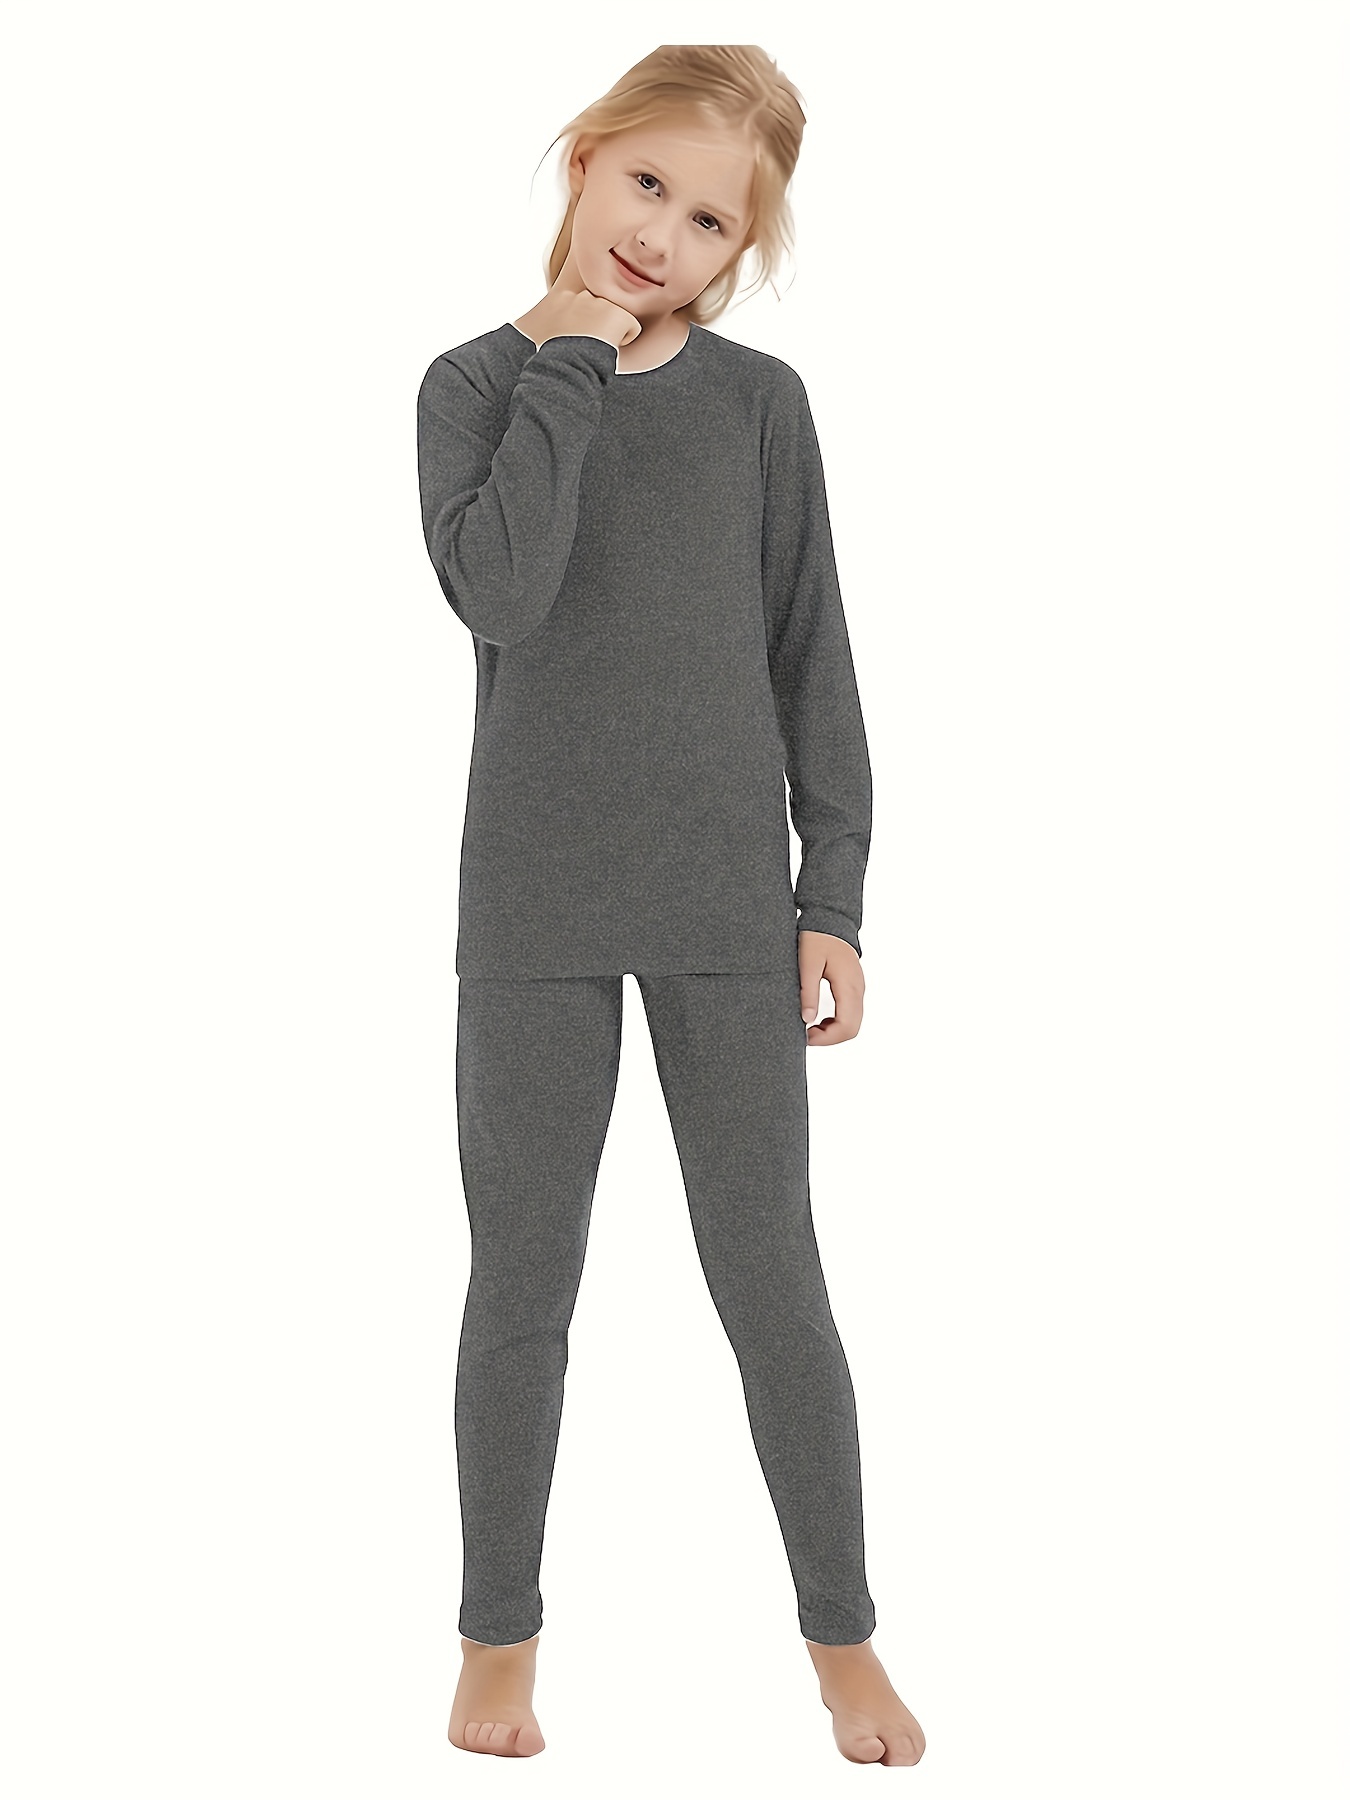 Unisex Boys And Girls Thermal Underwear Set Grey Sleeping Bear - 160 Yards